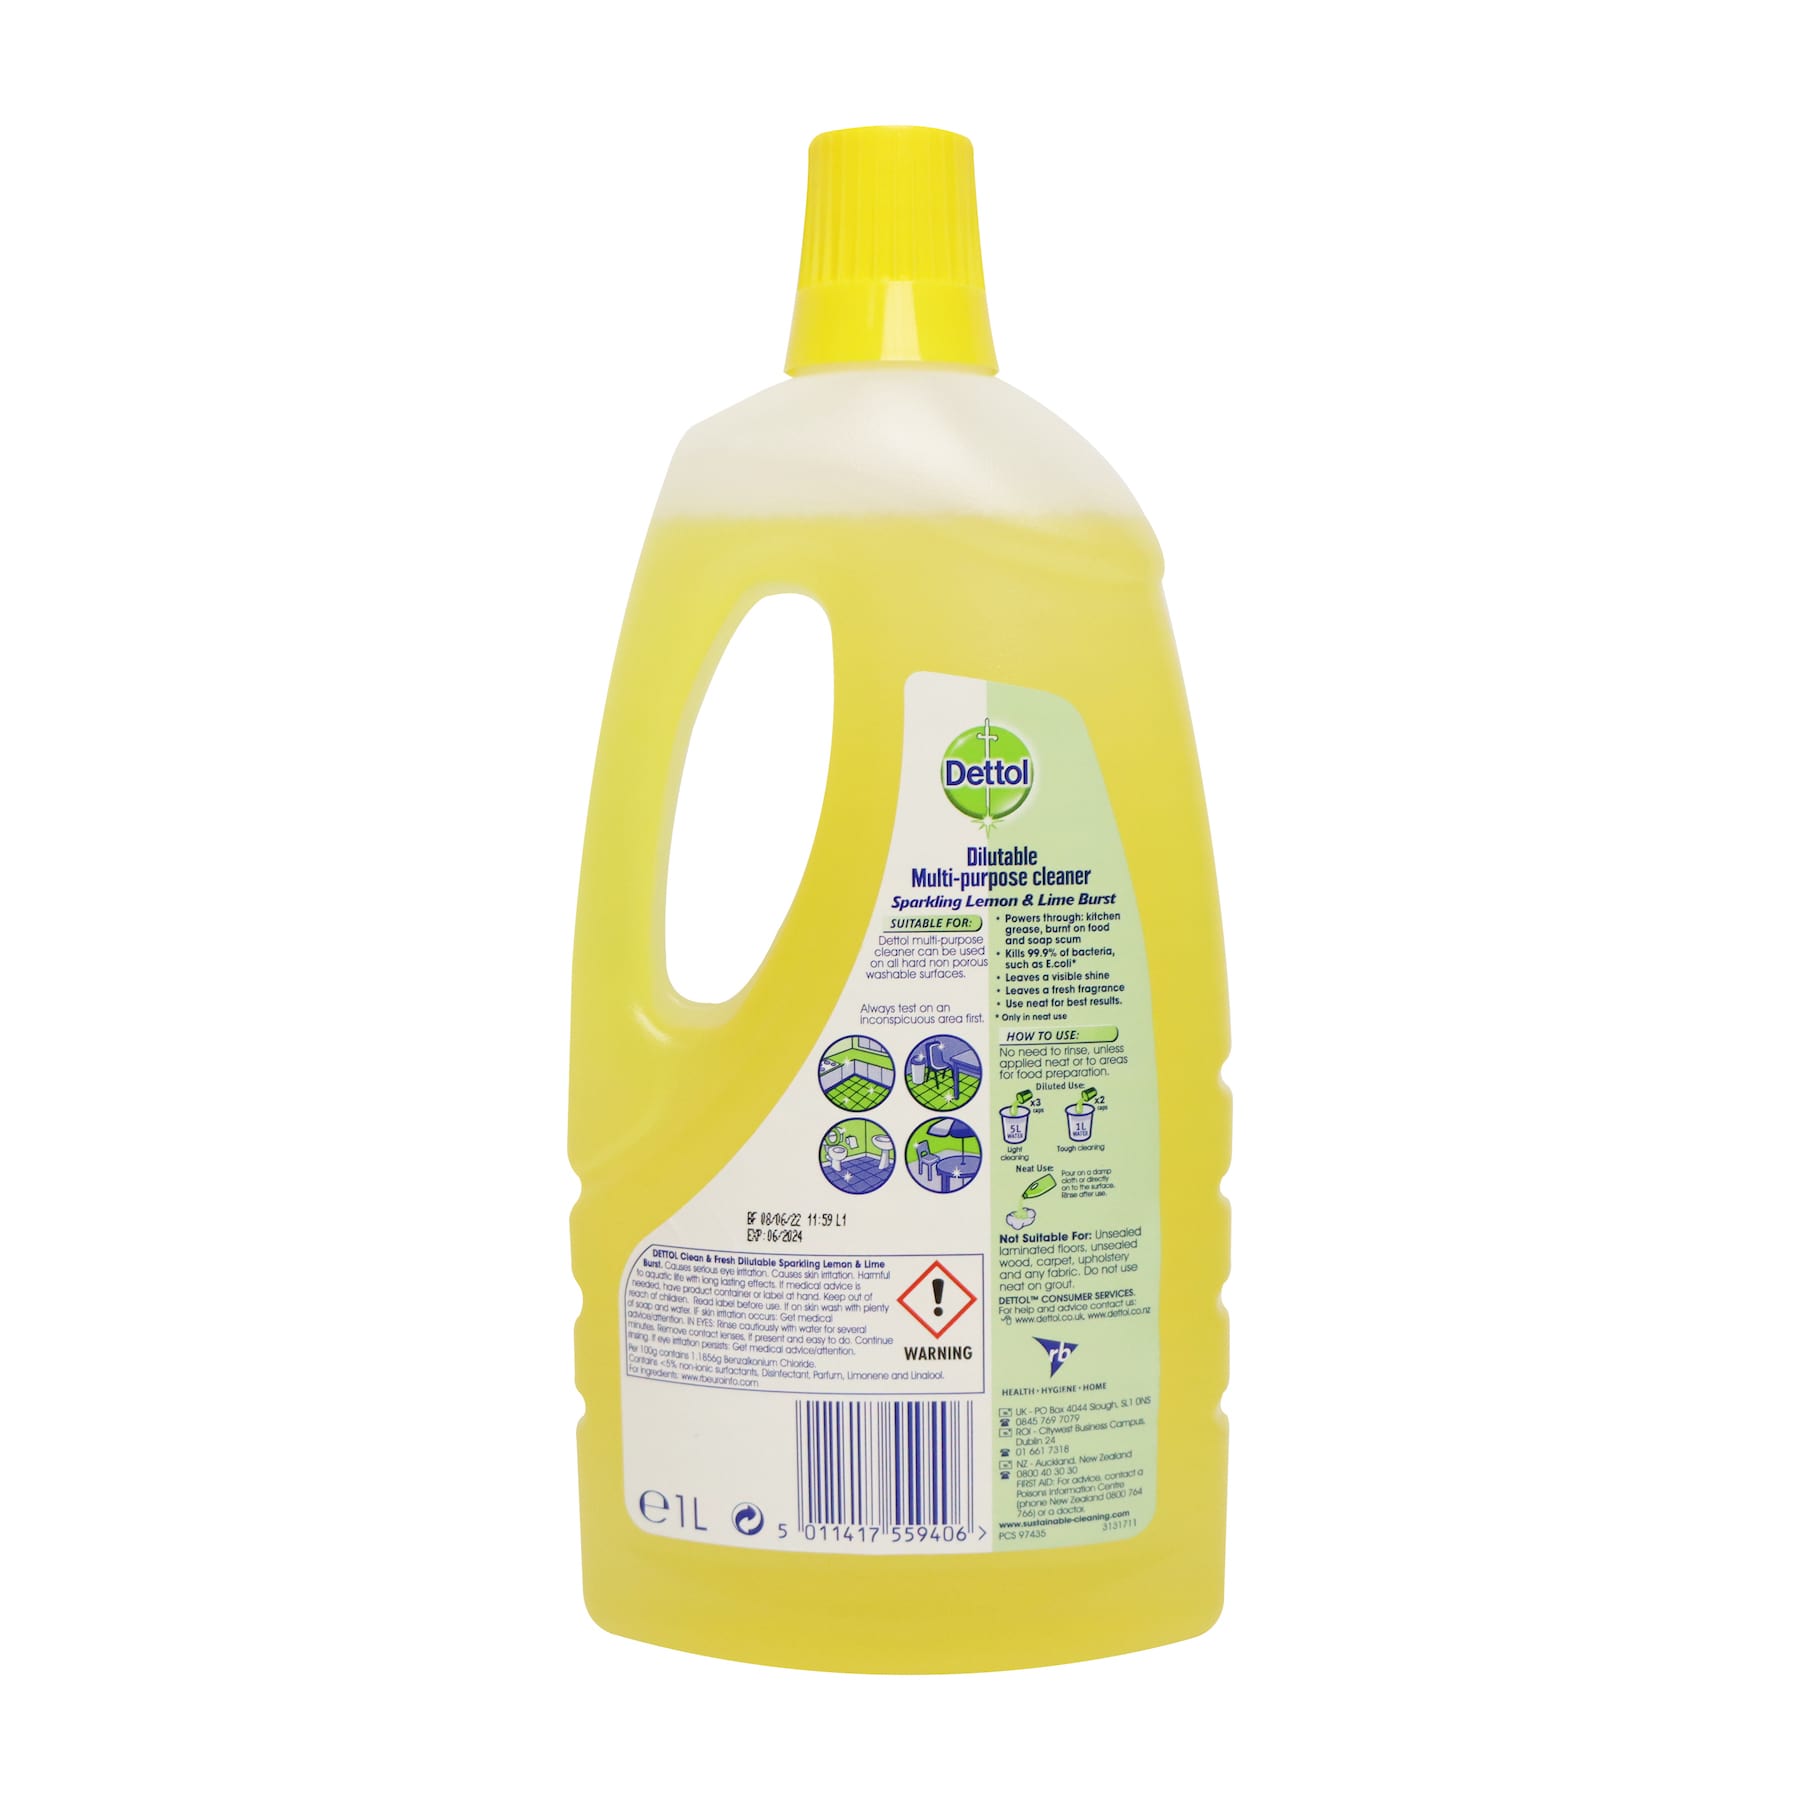 Dettol 滴露 全效抗菌地板清潔劑 1公升 (檸檬味)